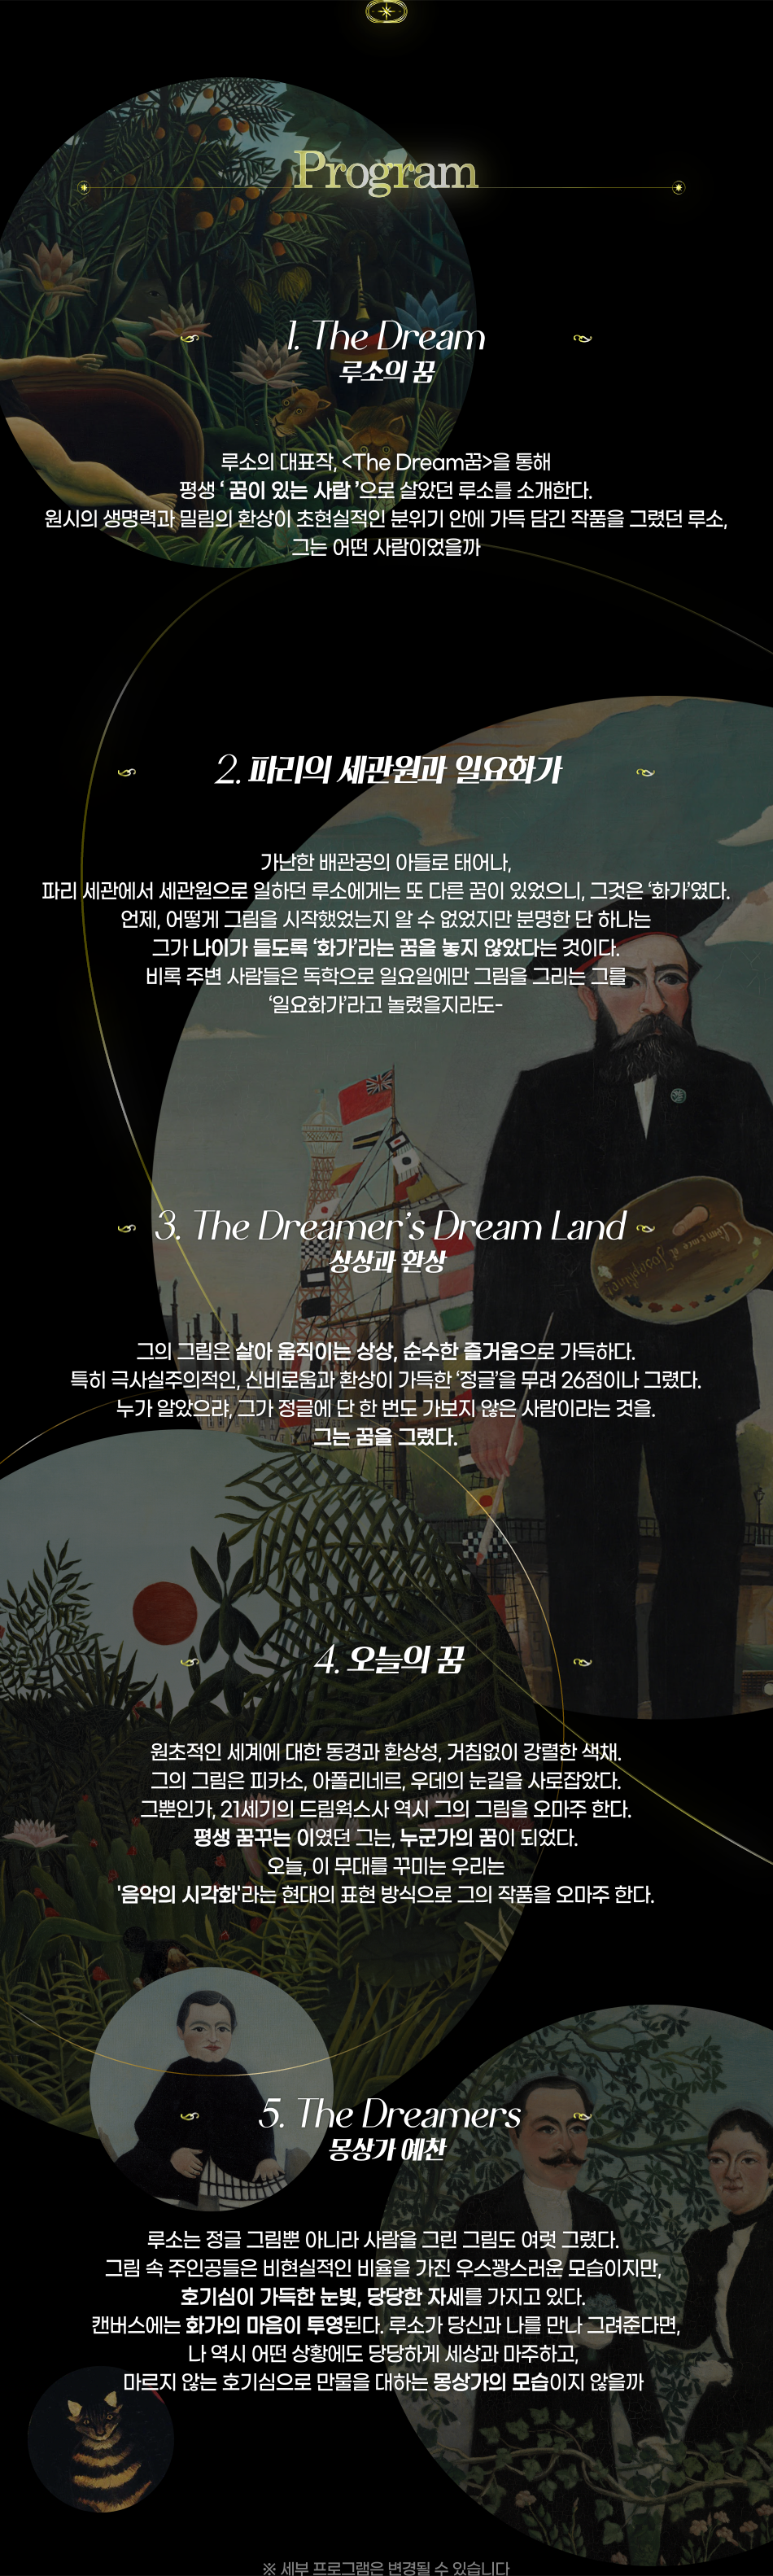 The Dreamer - 루소&뮤직 콘서트